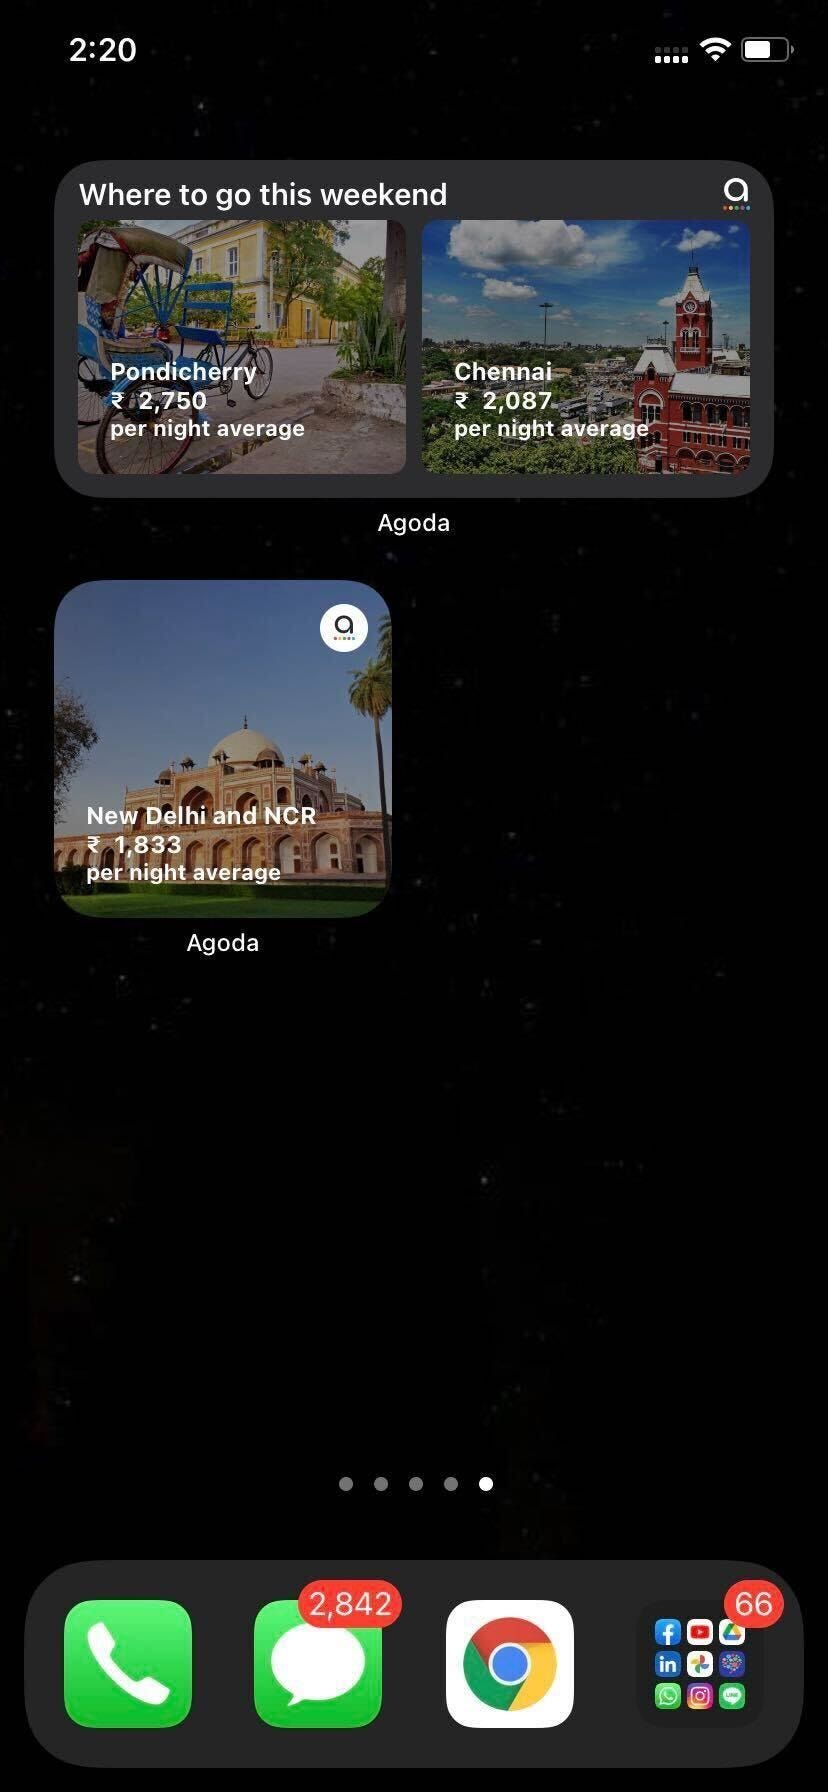 Glimpse of how the Agoda widget looks on iPhone.